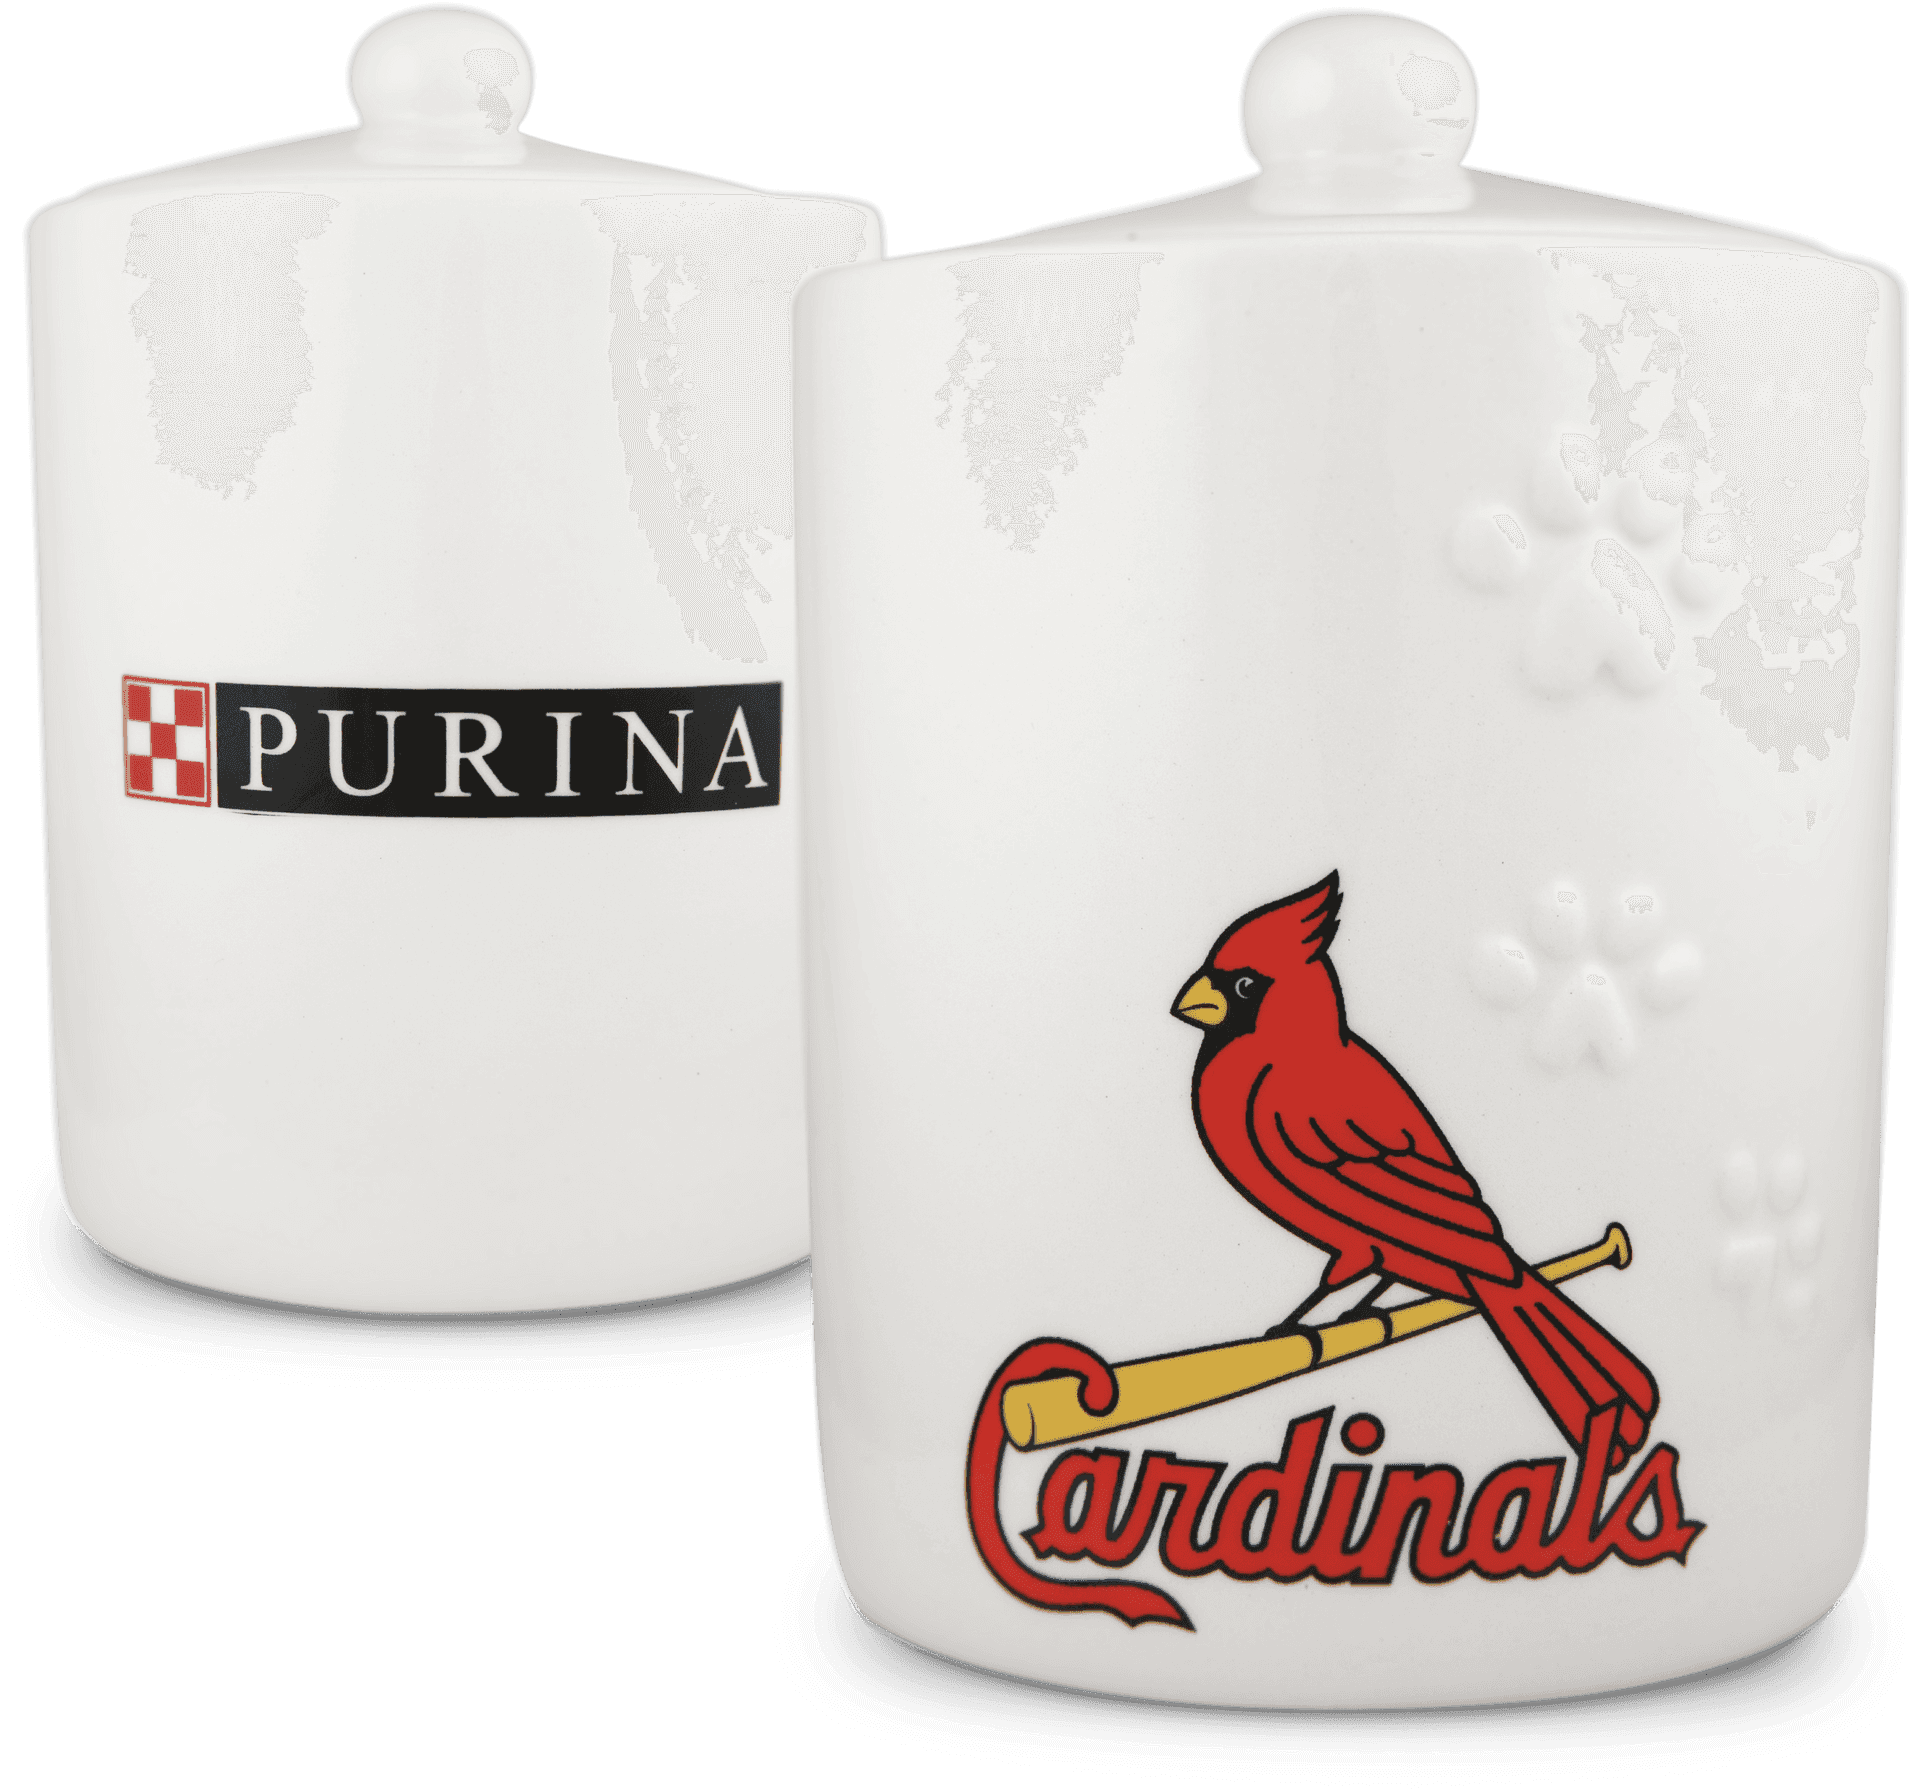 Purina Cardinals Pet Food Storage Containers PNG